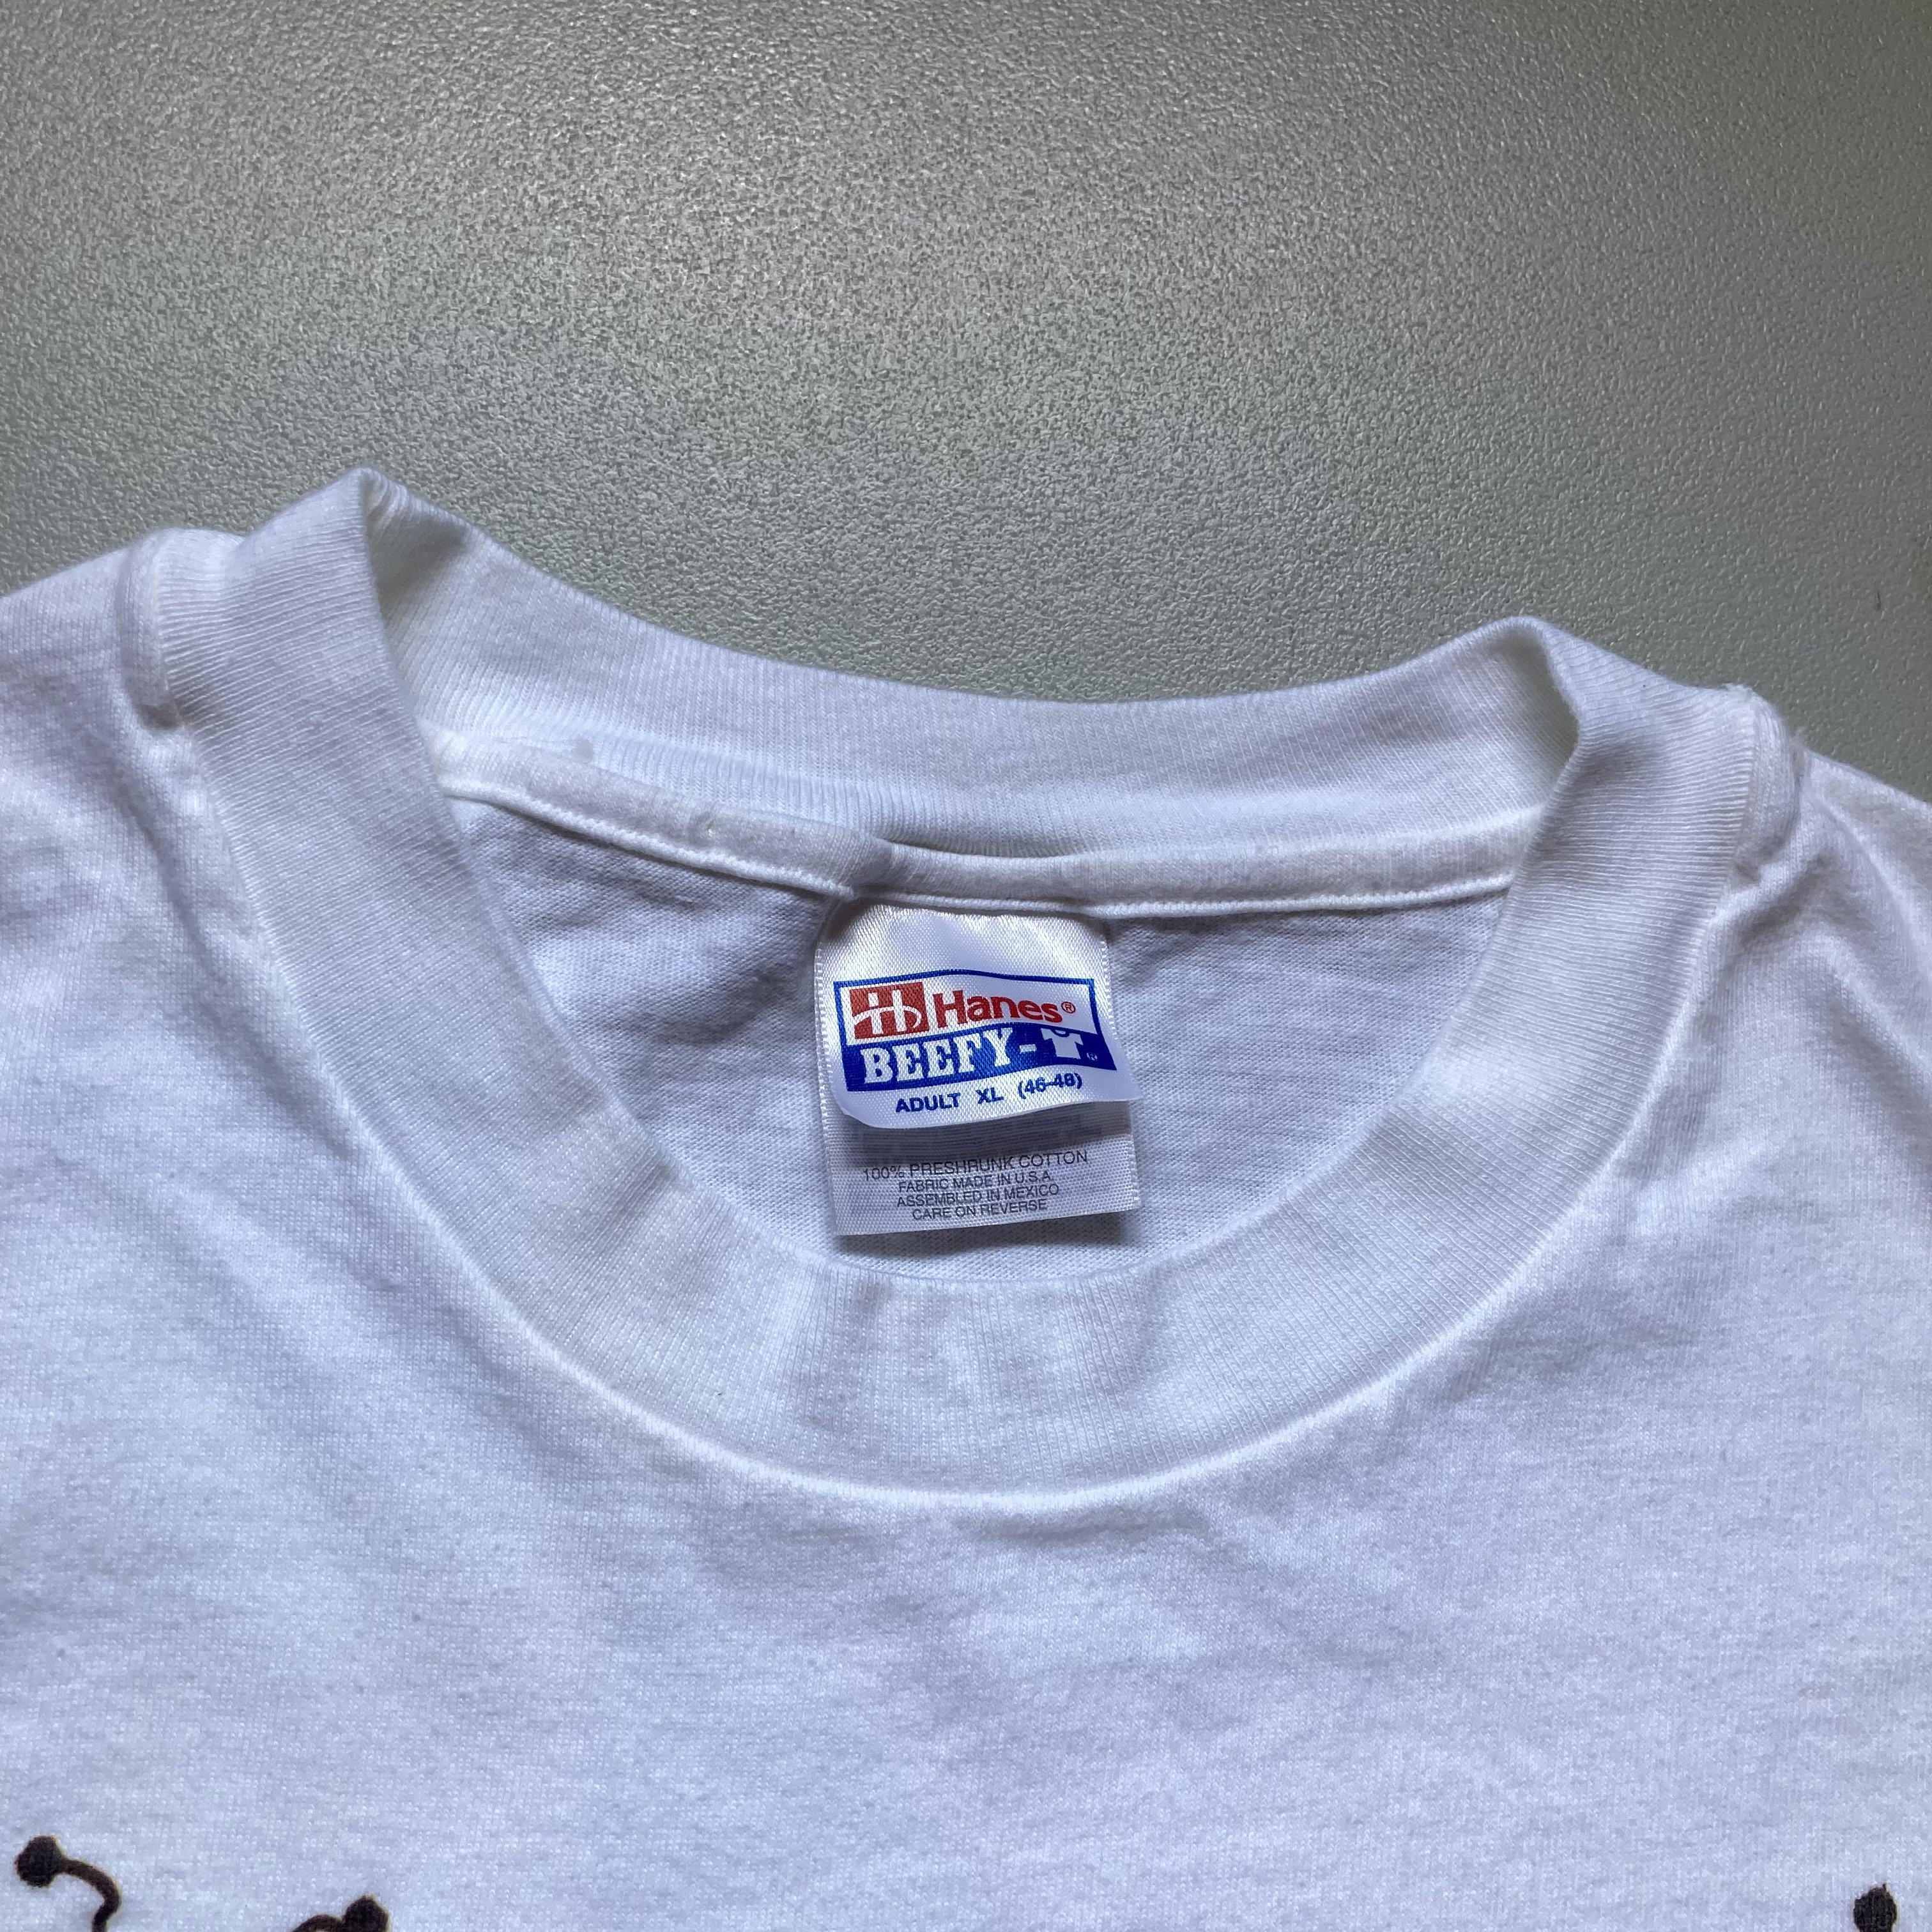 90s Anne Geddes Baby photo T-shirt アンゲデス 赤ちゃんフォトT 